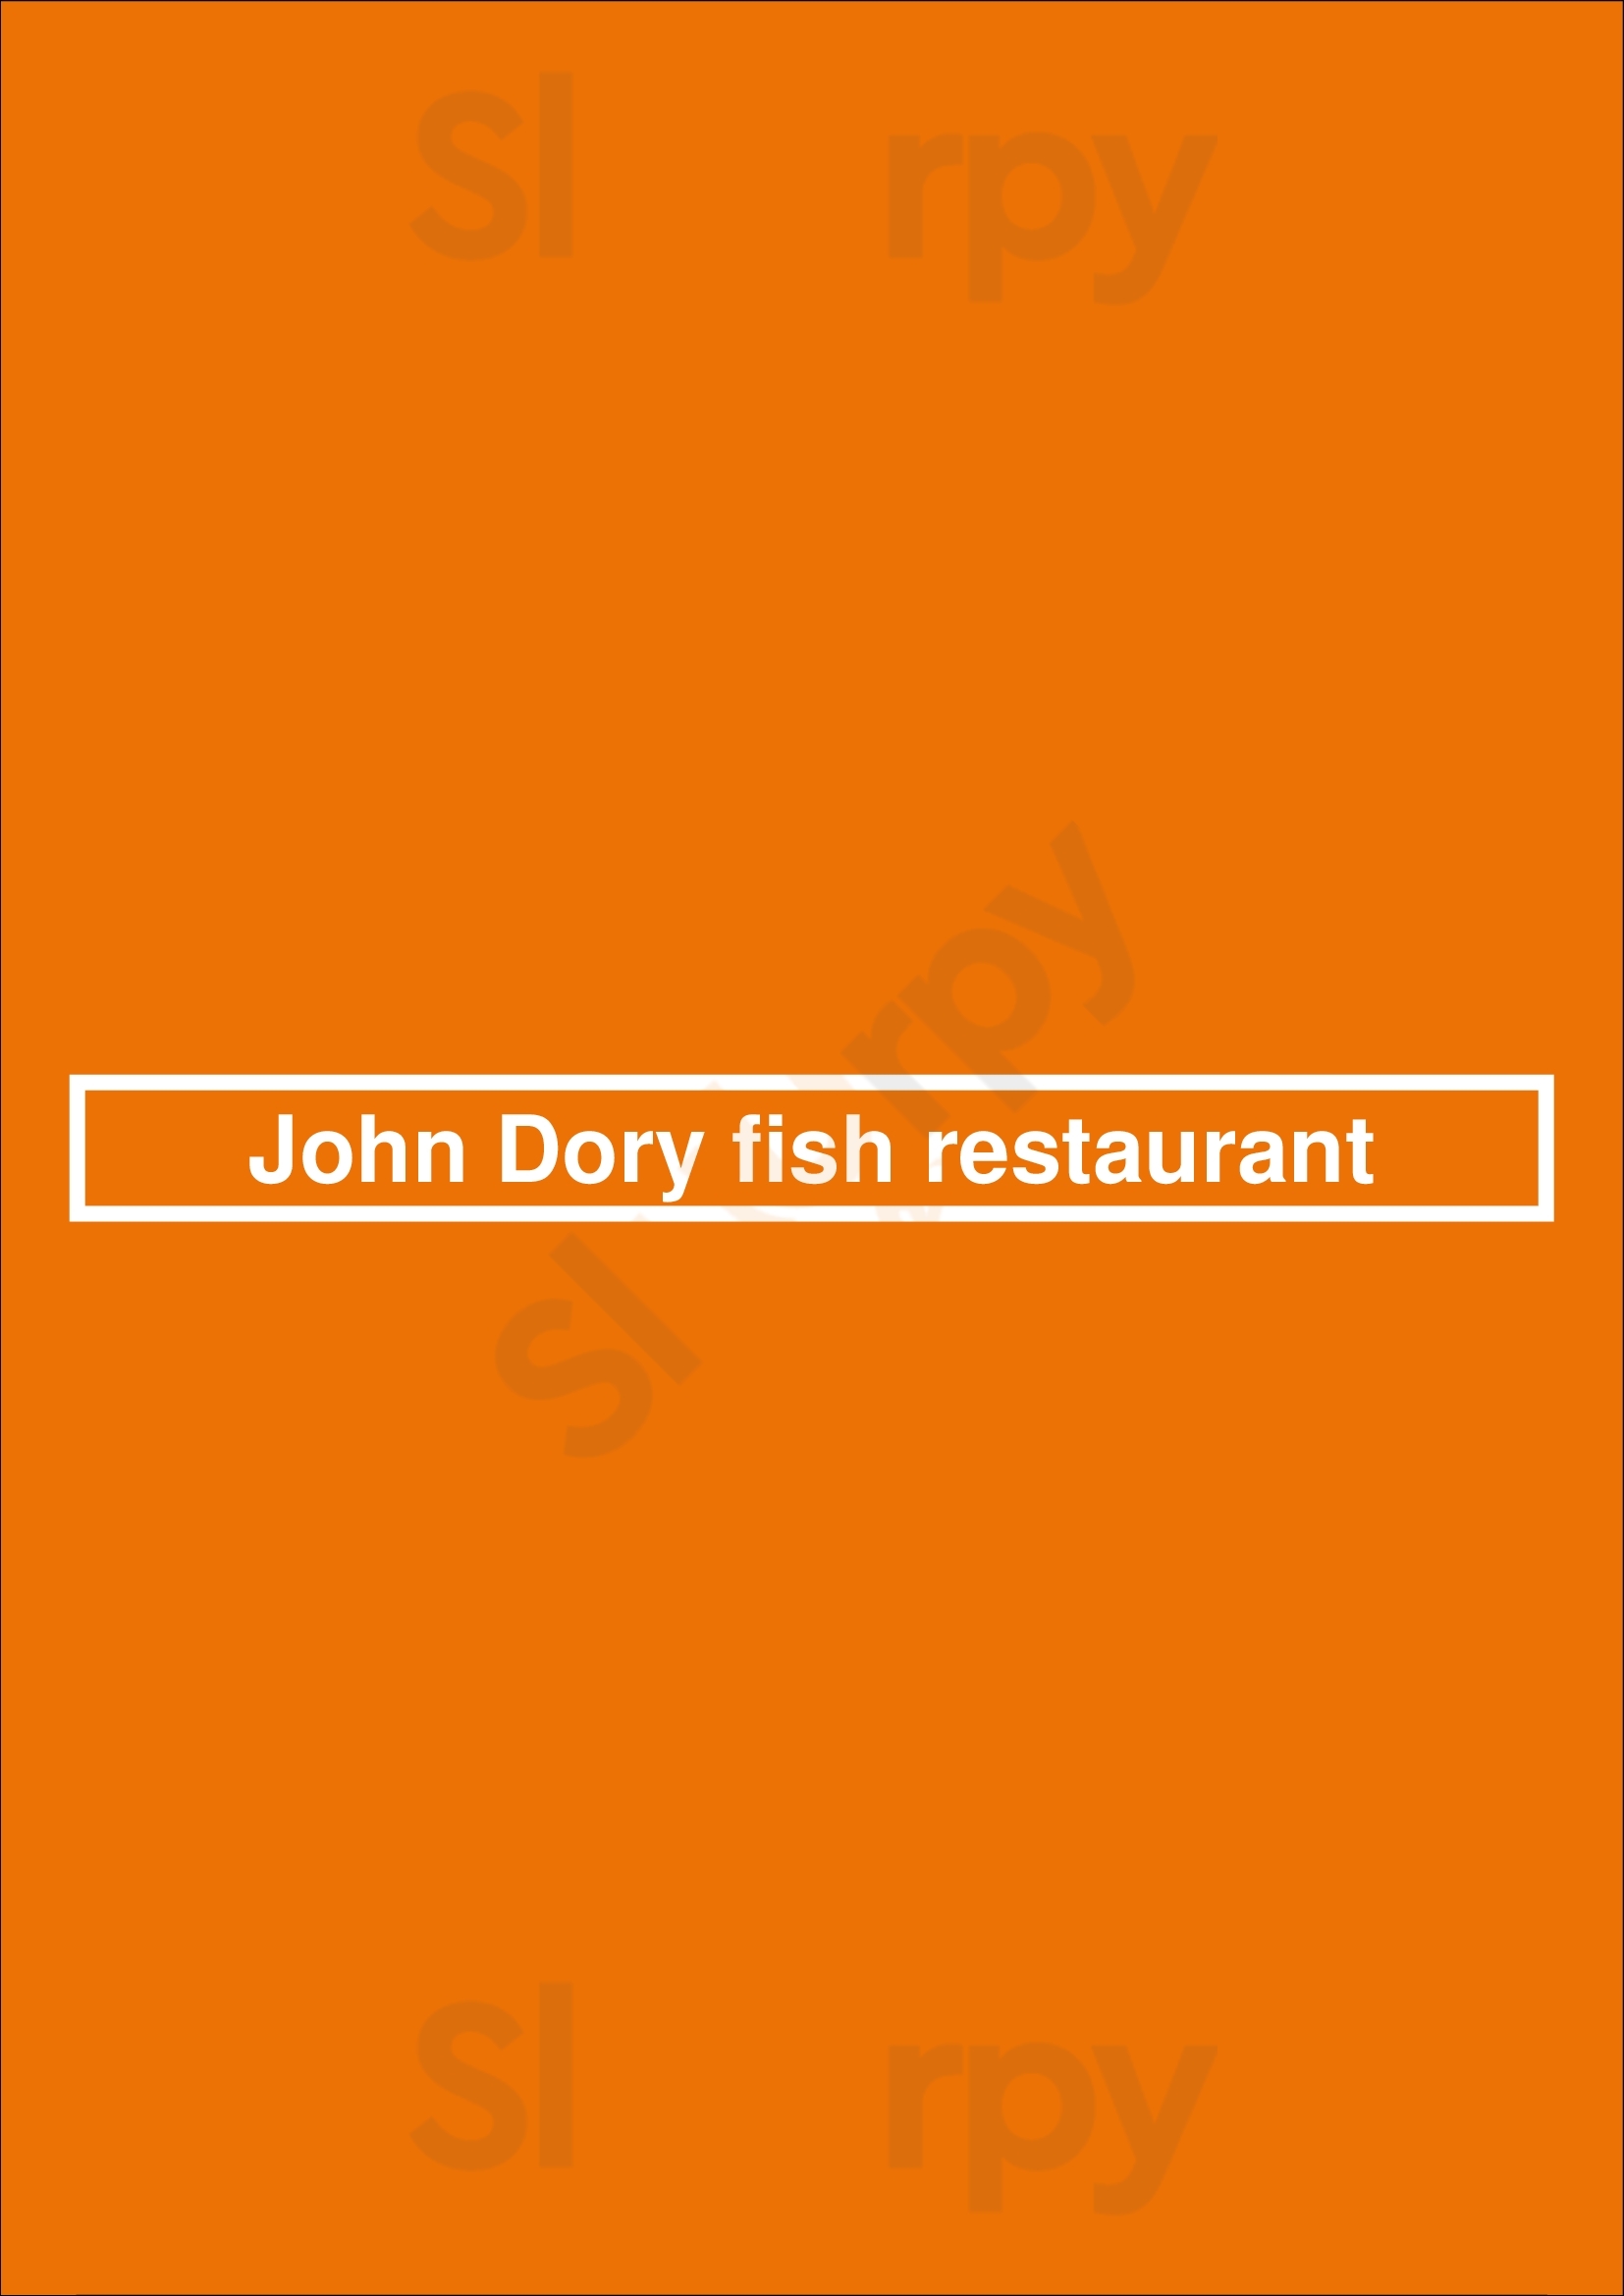 John Dory Fish Restaurant Amsterdam Menu - 1